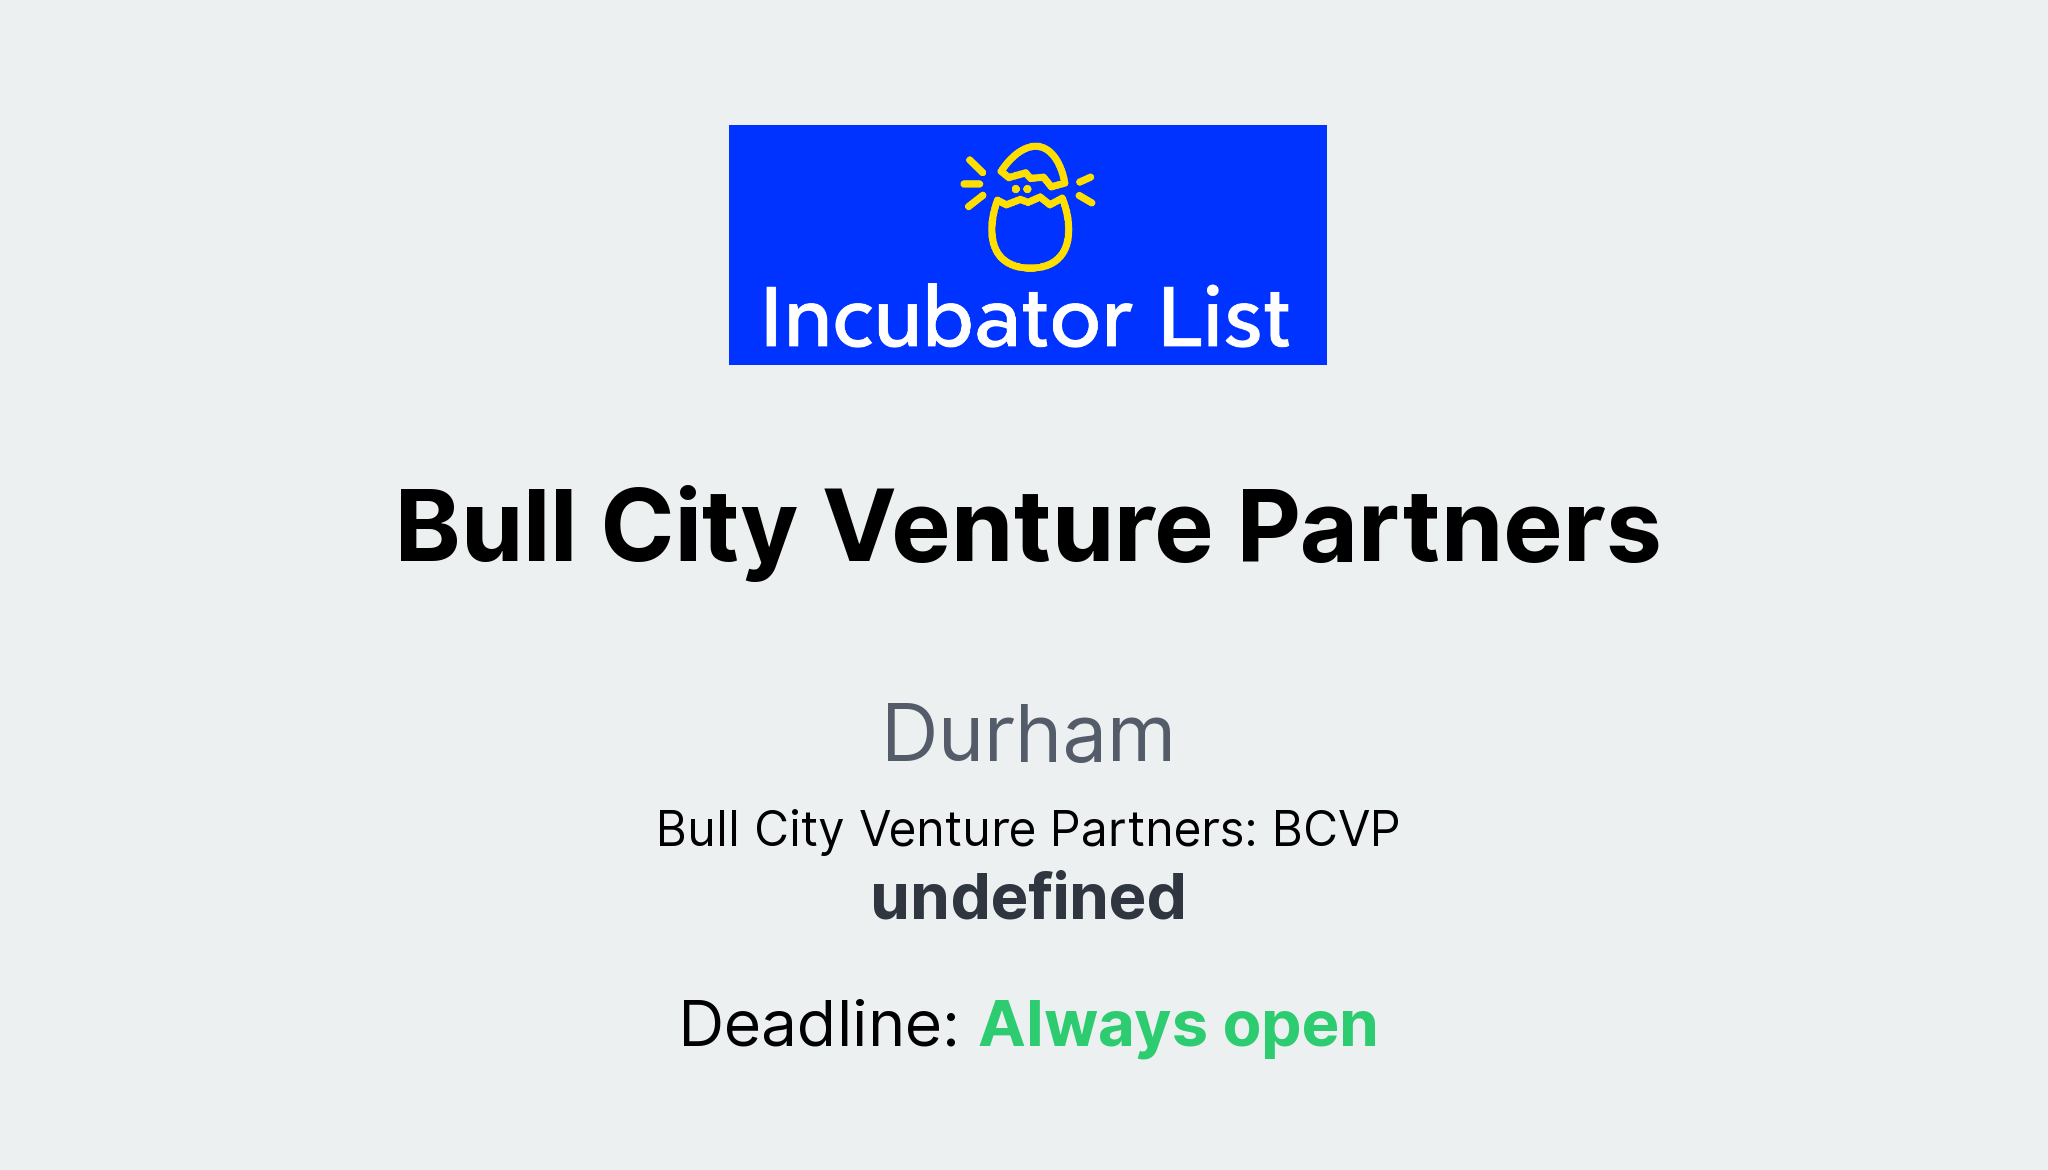 Bull City Venture Partners - Key Information